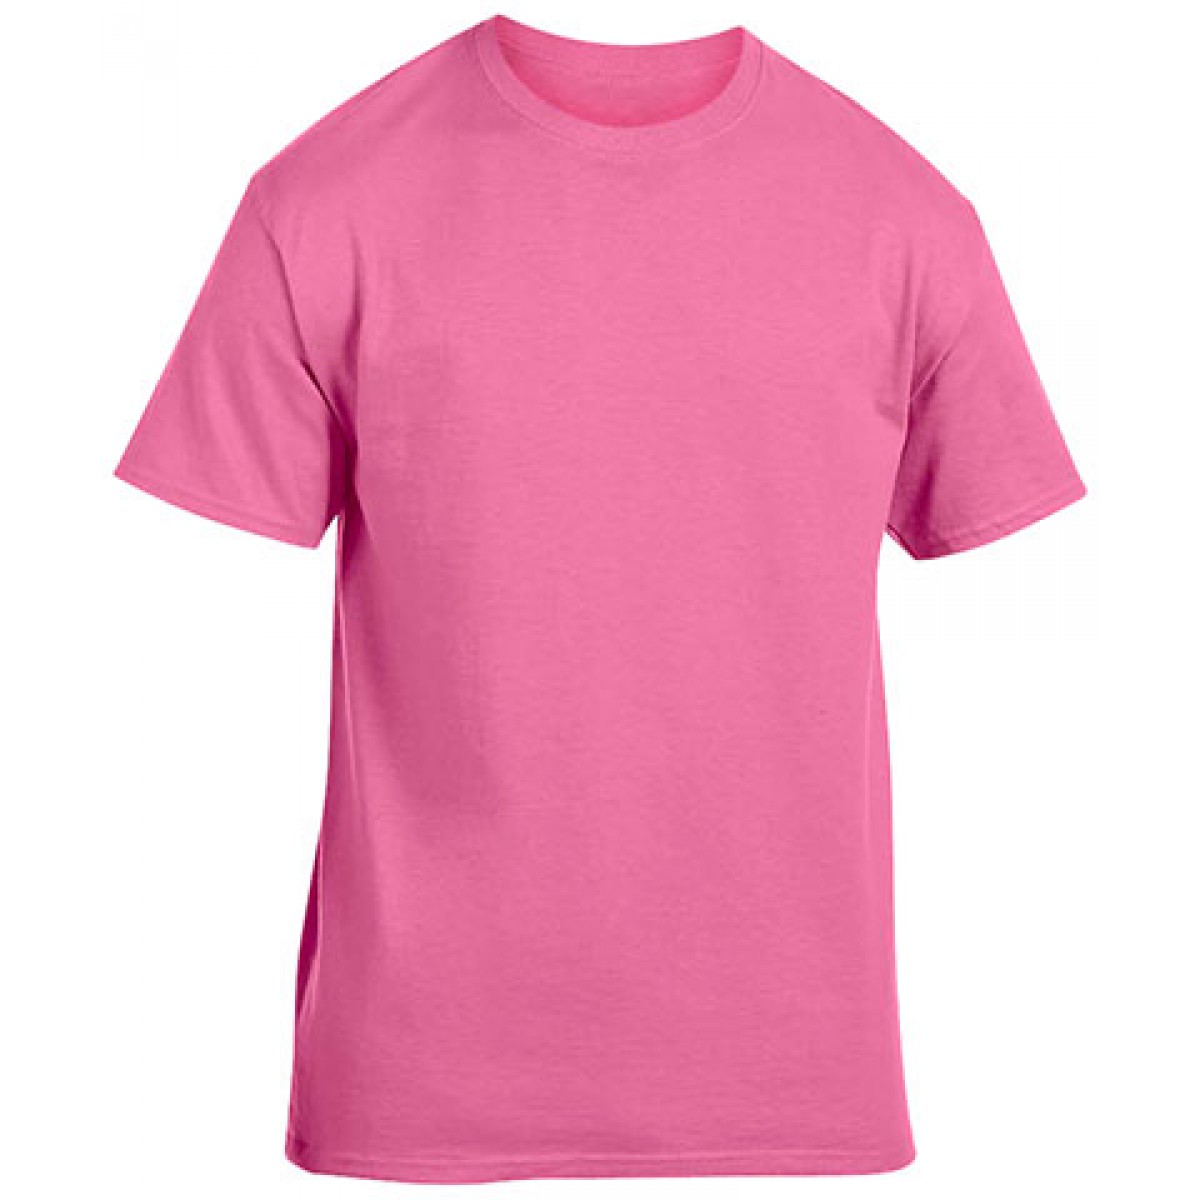 Cotton Short Sleeve T-Shirt-Safety Pink-3XL